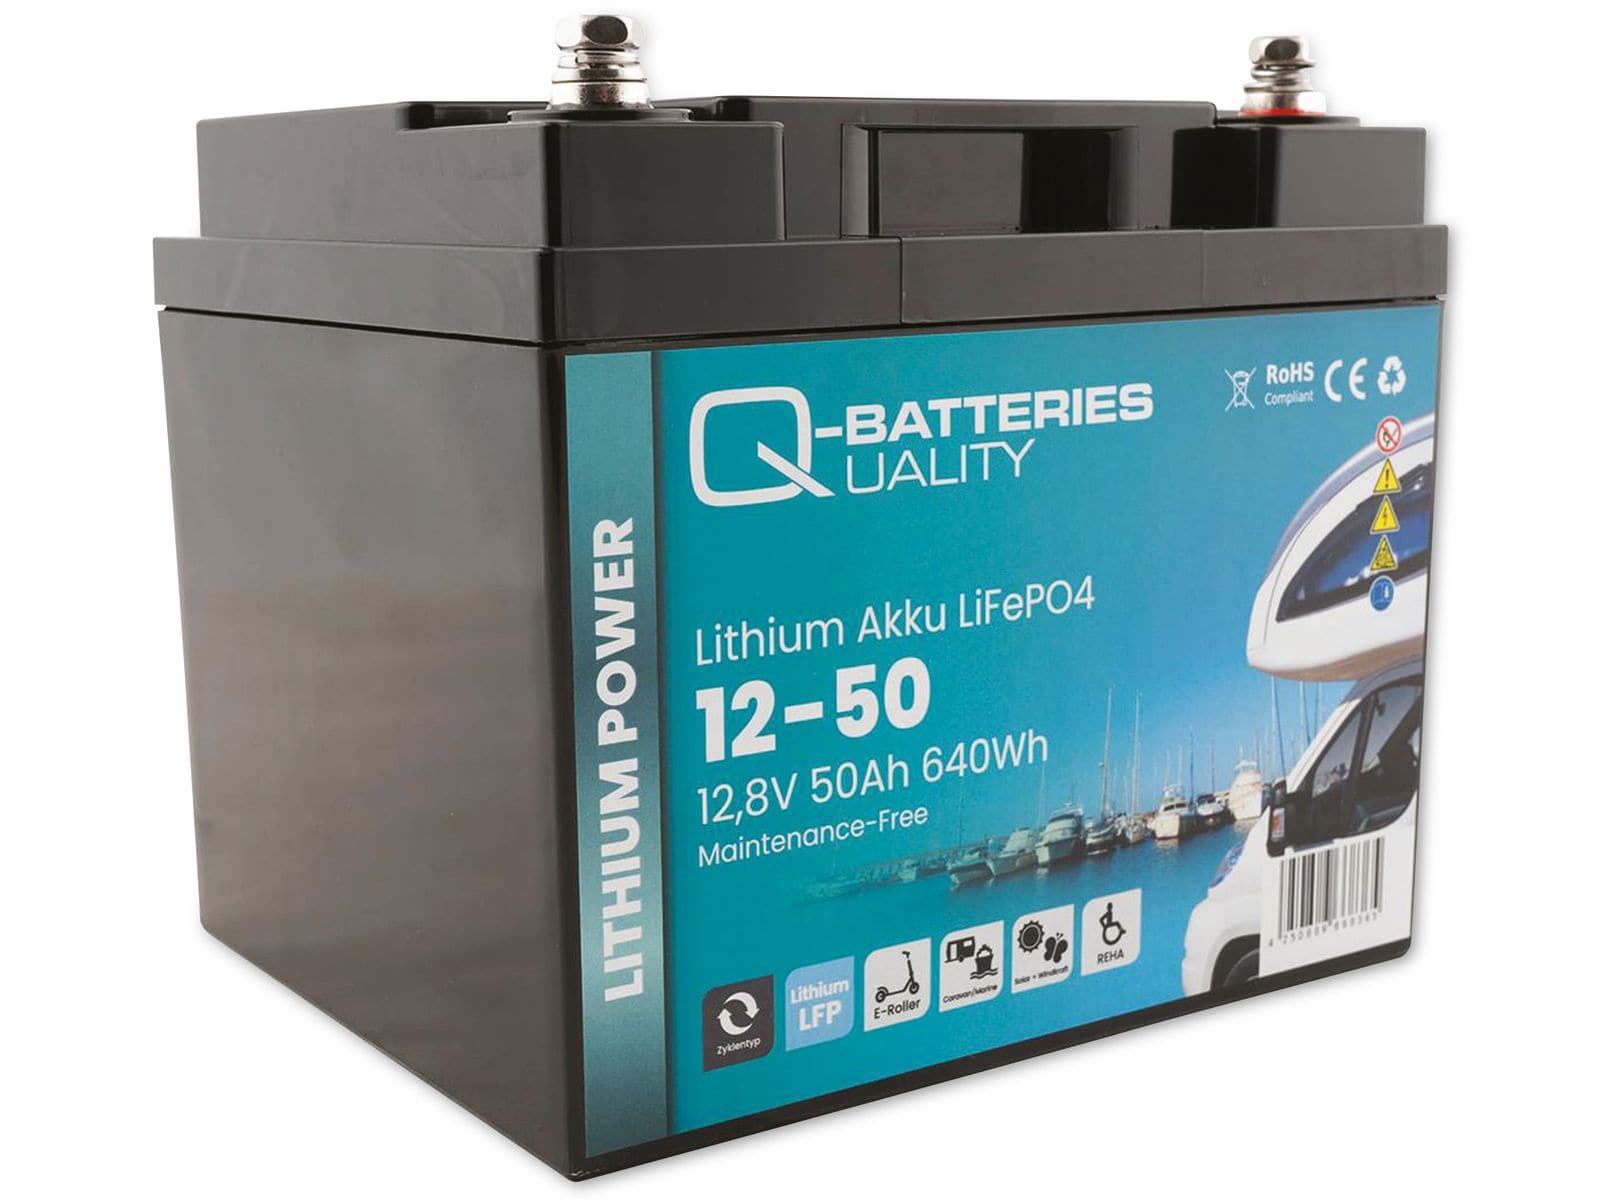 Q-BATTERIES Lithium Akku 12-50 12,8V, 50Ah 640Wh LiFePO4 Batterie von Q-Batteries